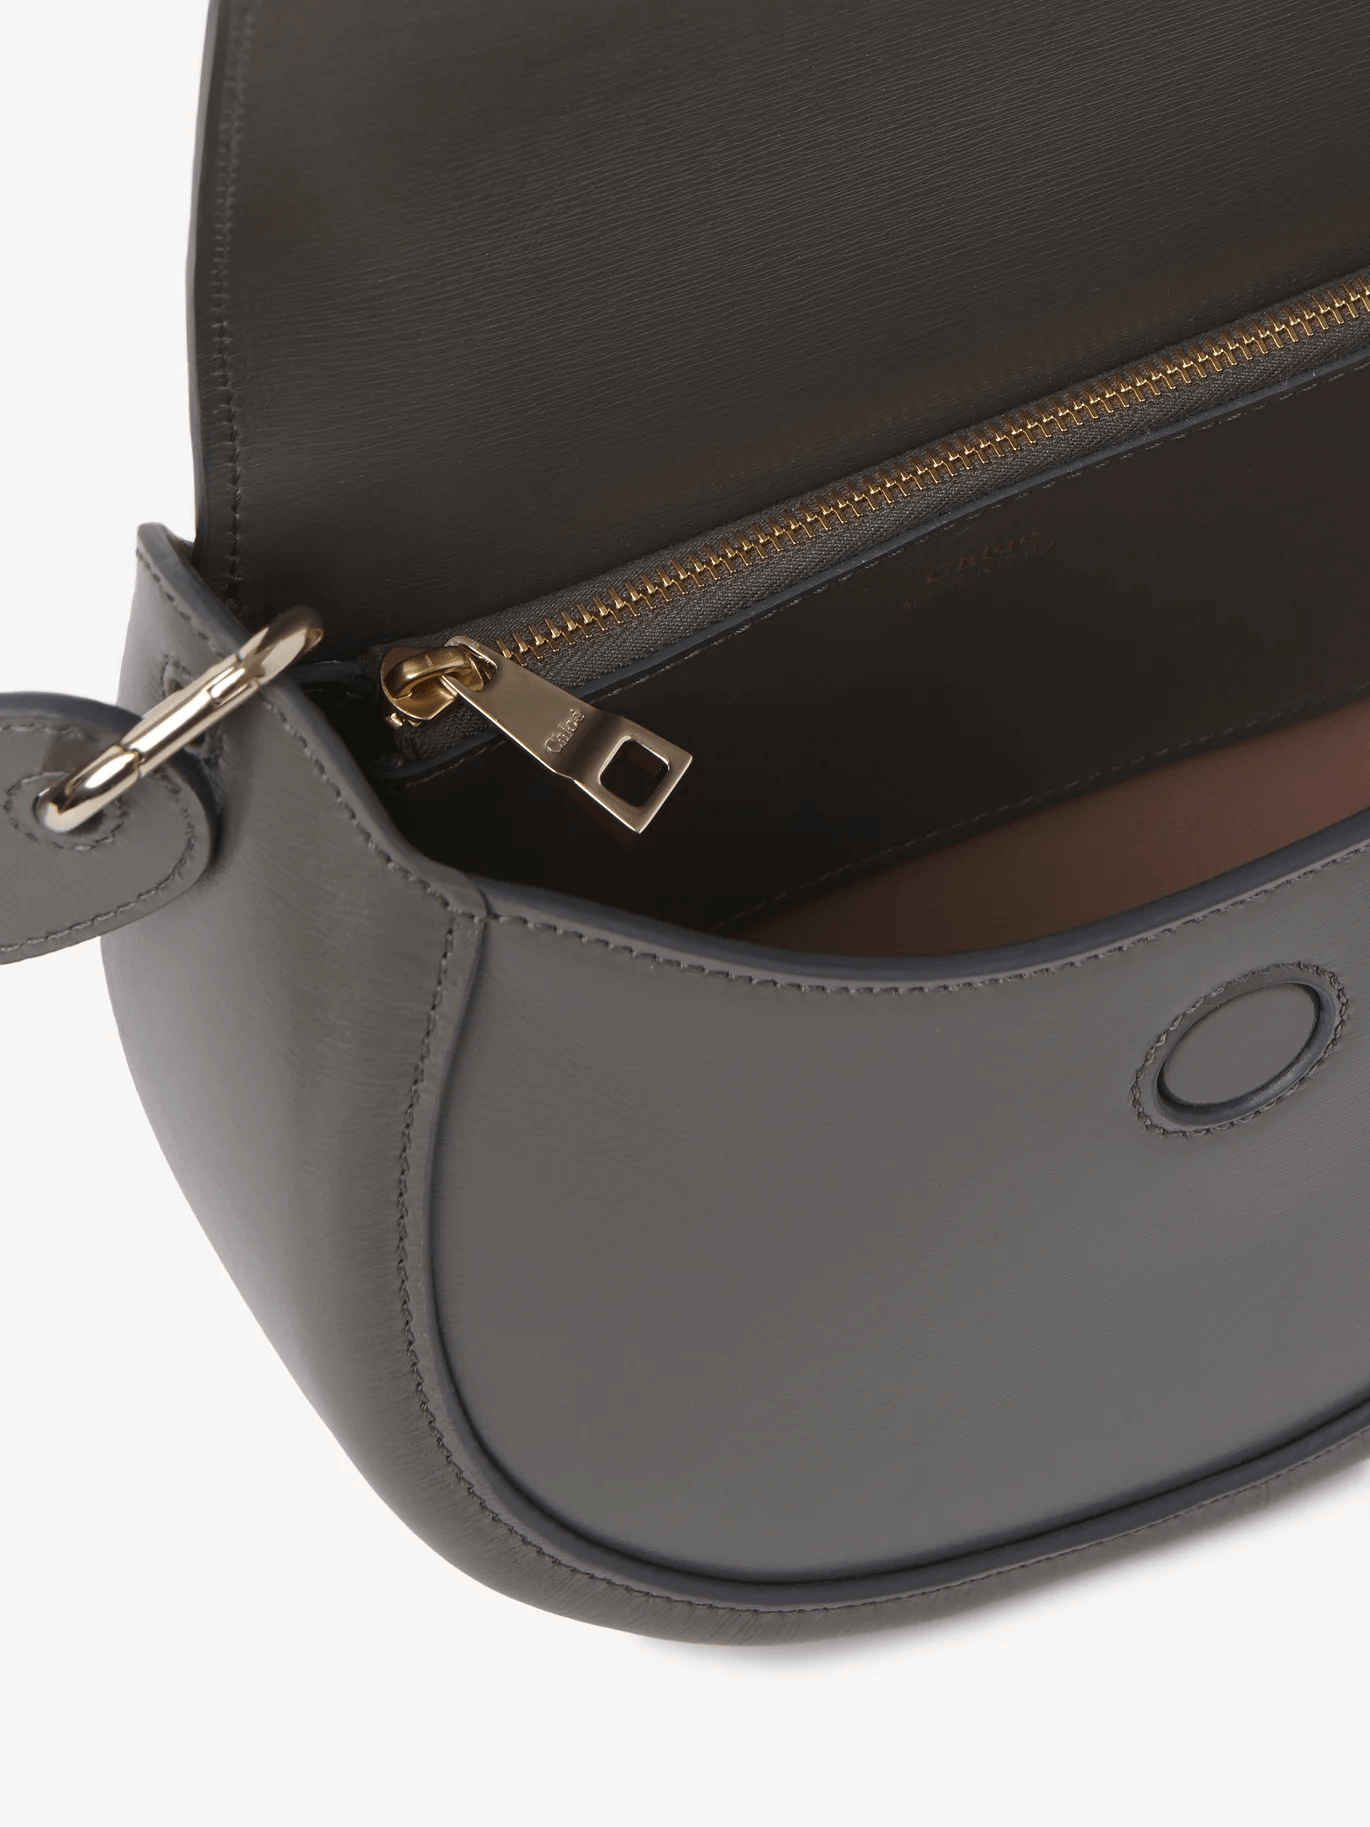 Chloè Arlene Small Crossbody Bag in Elephant Grey available at The New Trend Australia.